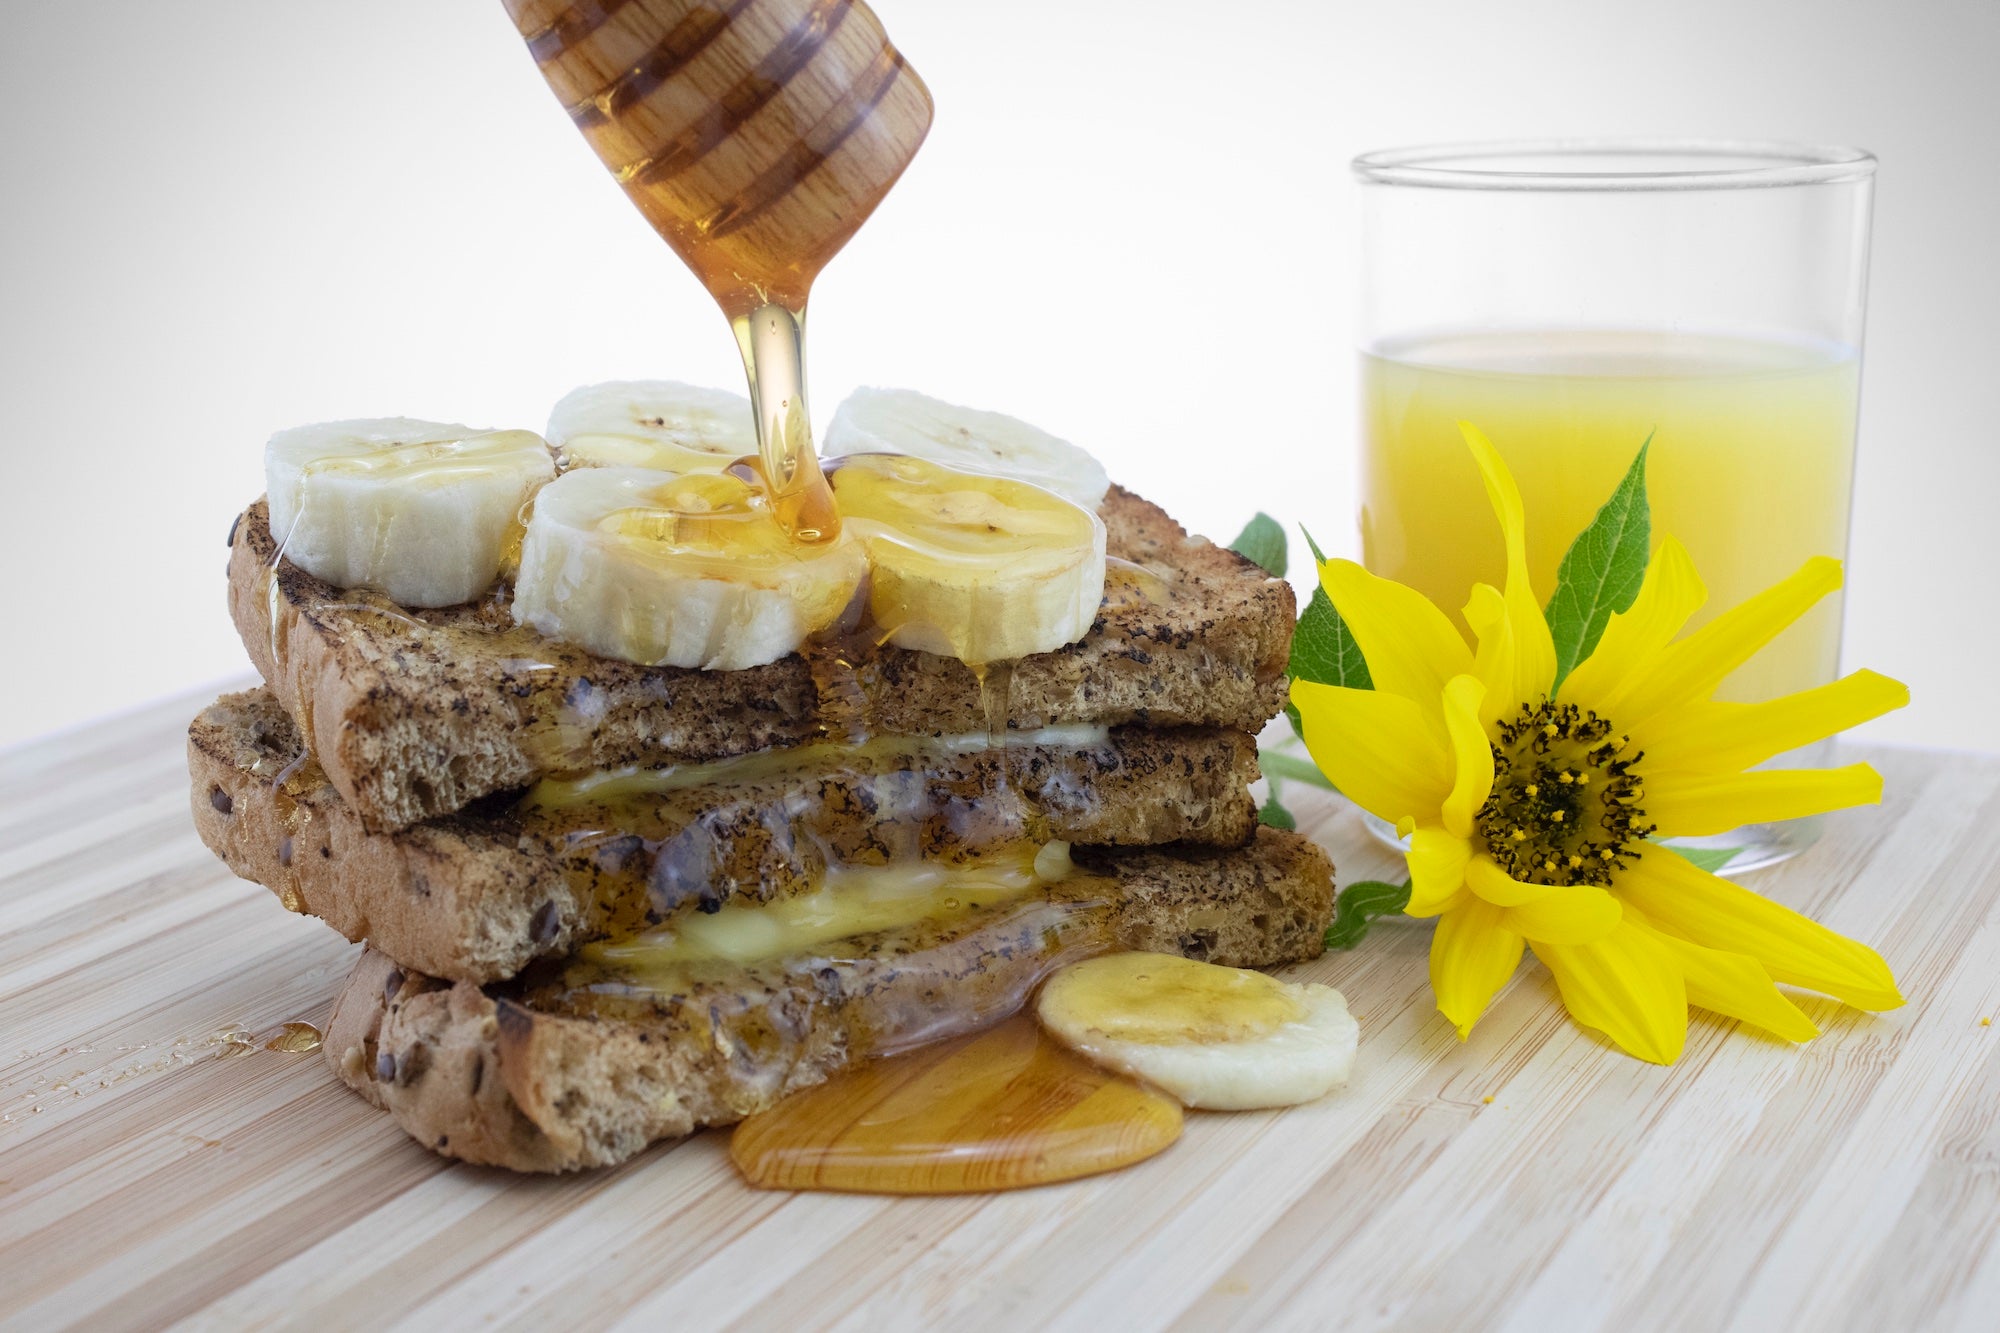 Honey on banana sandwich with glass of orange juice